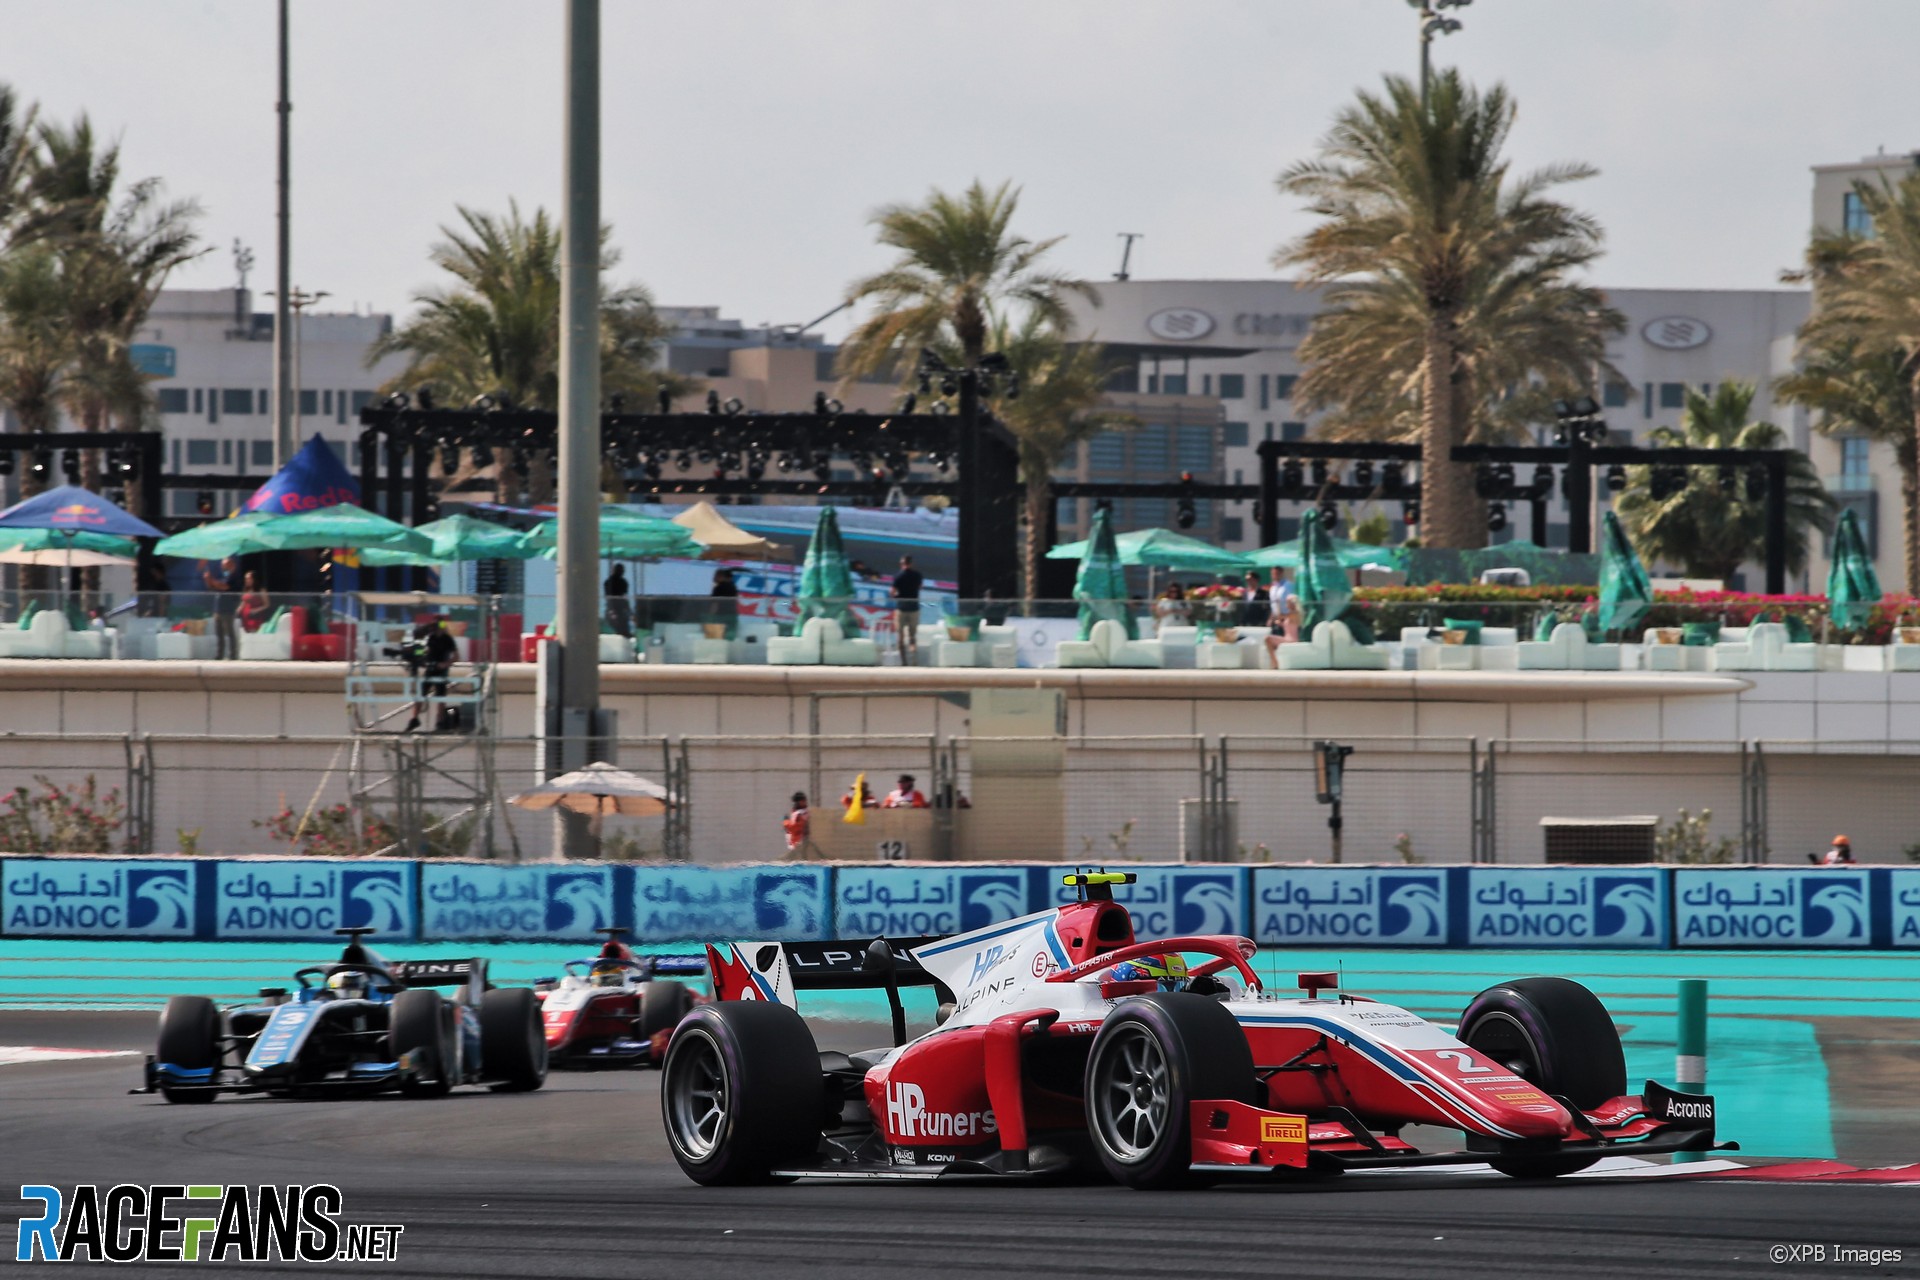 Oscar Piastri, Yas Marina Circuit, Abu Dhabi, 2021